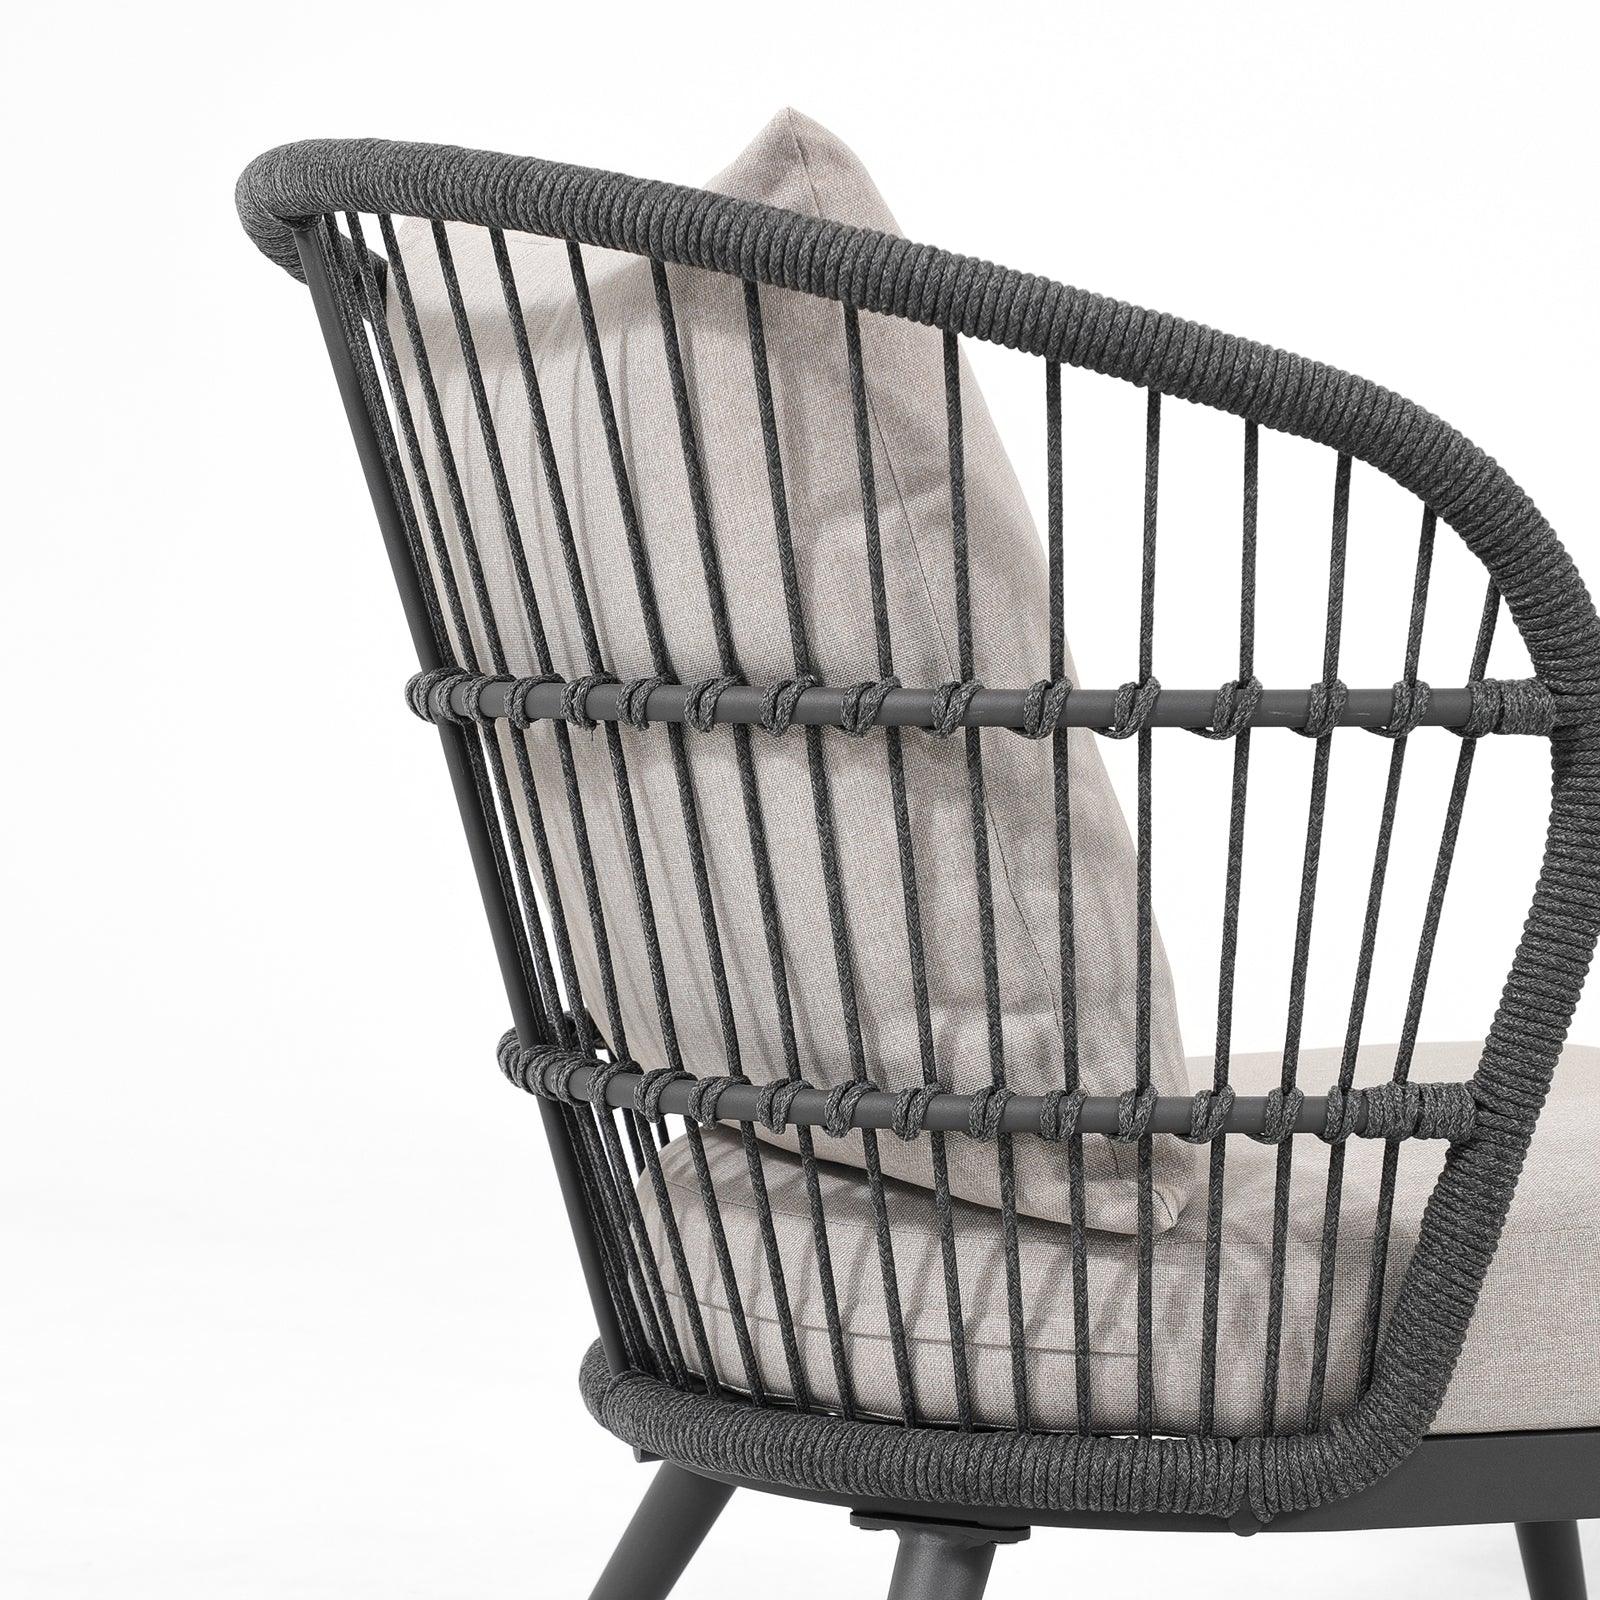 Comino grey aluminum Sofa with backrest rope design, shell-shaped design, backrest details-Jardina Furniture